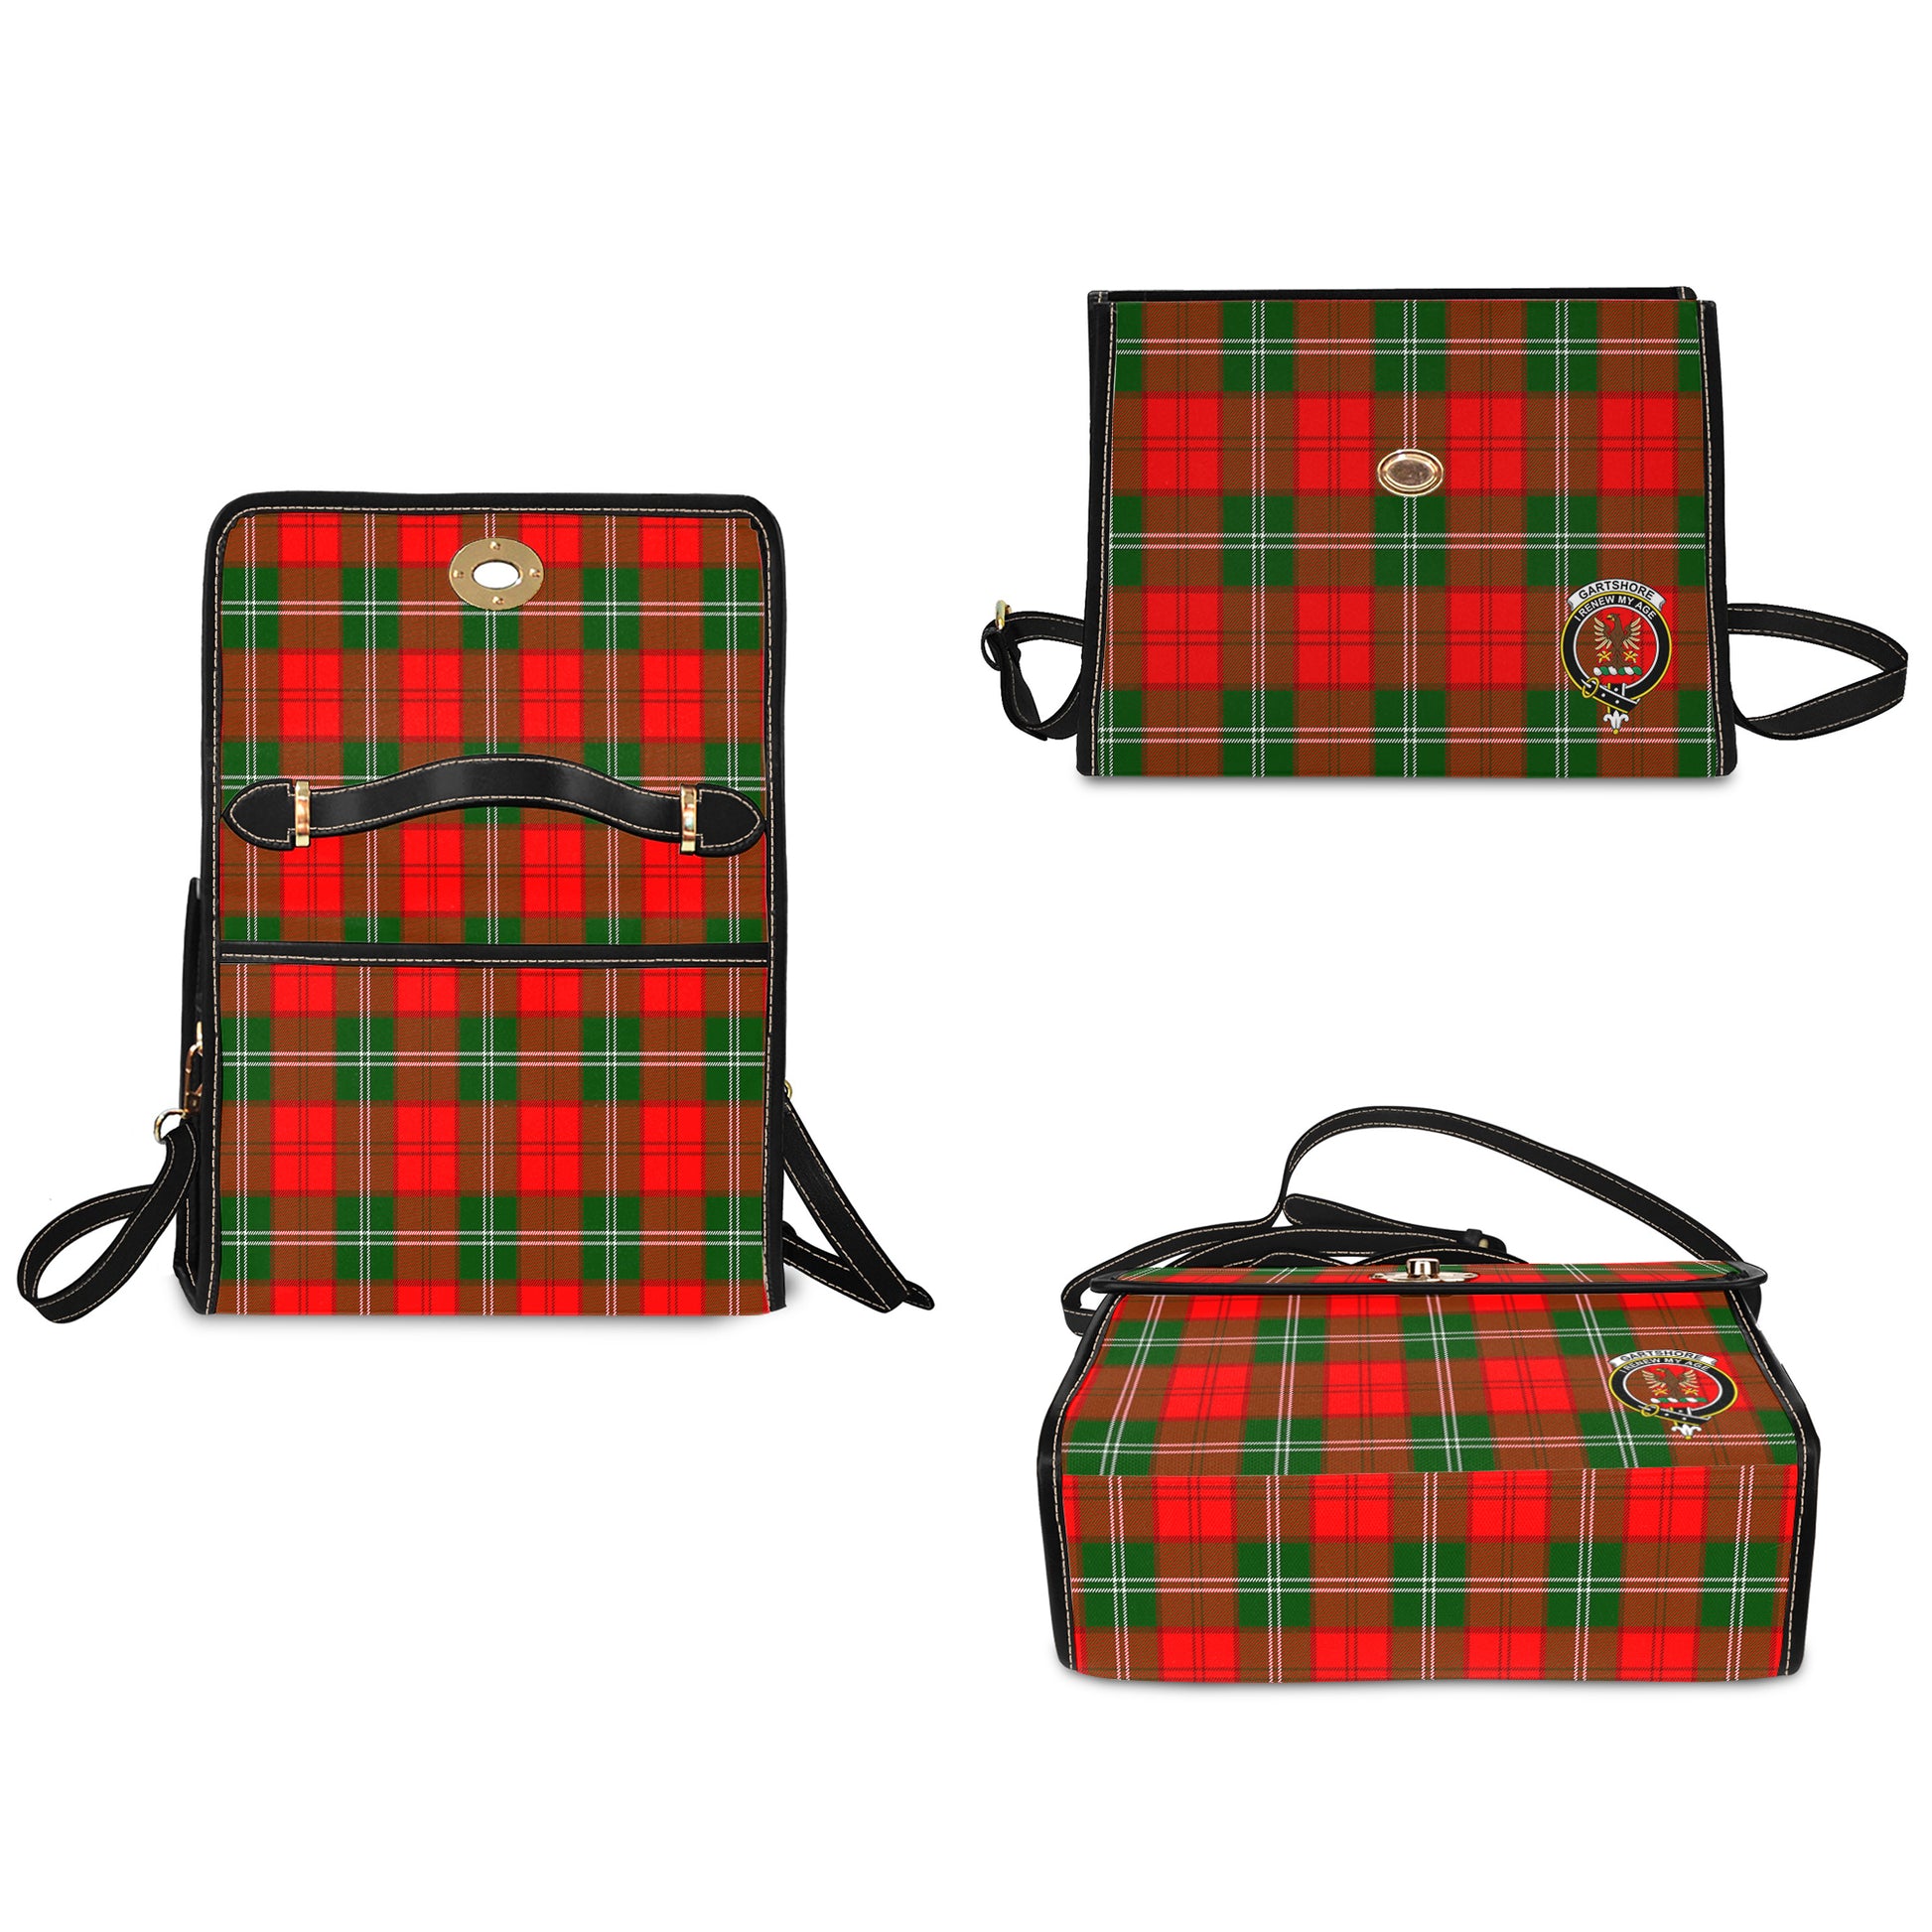 gartshore-tartan-leather-strap-waterproof-canvas-bag-with-family-crest